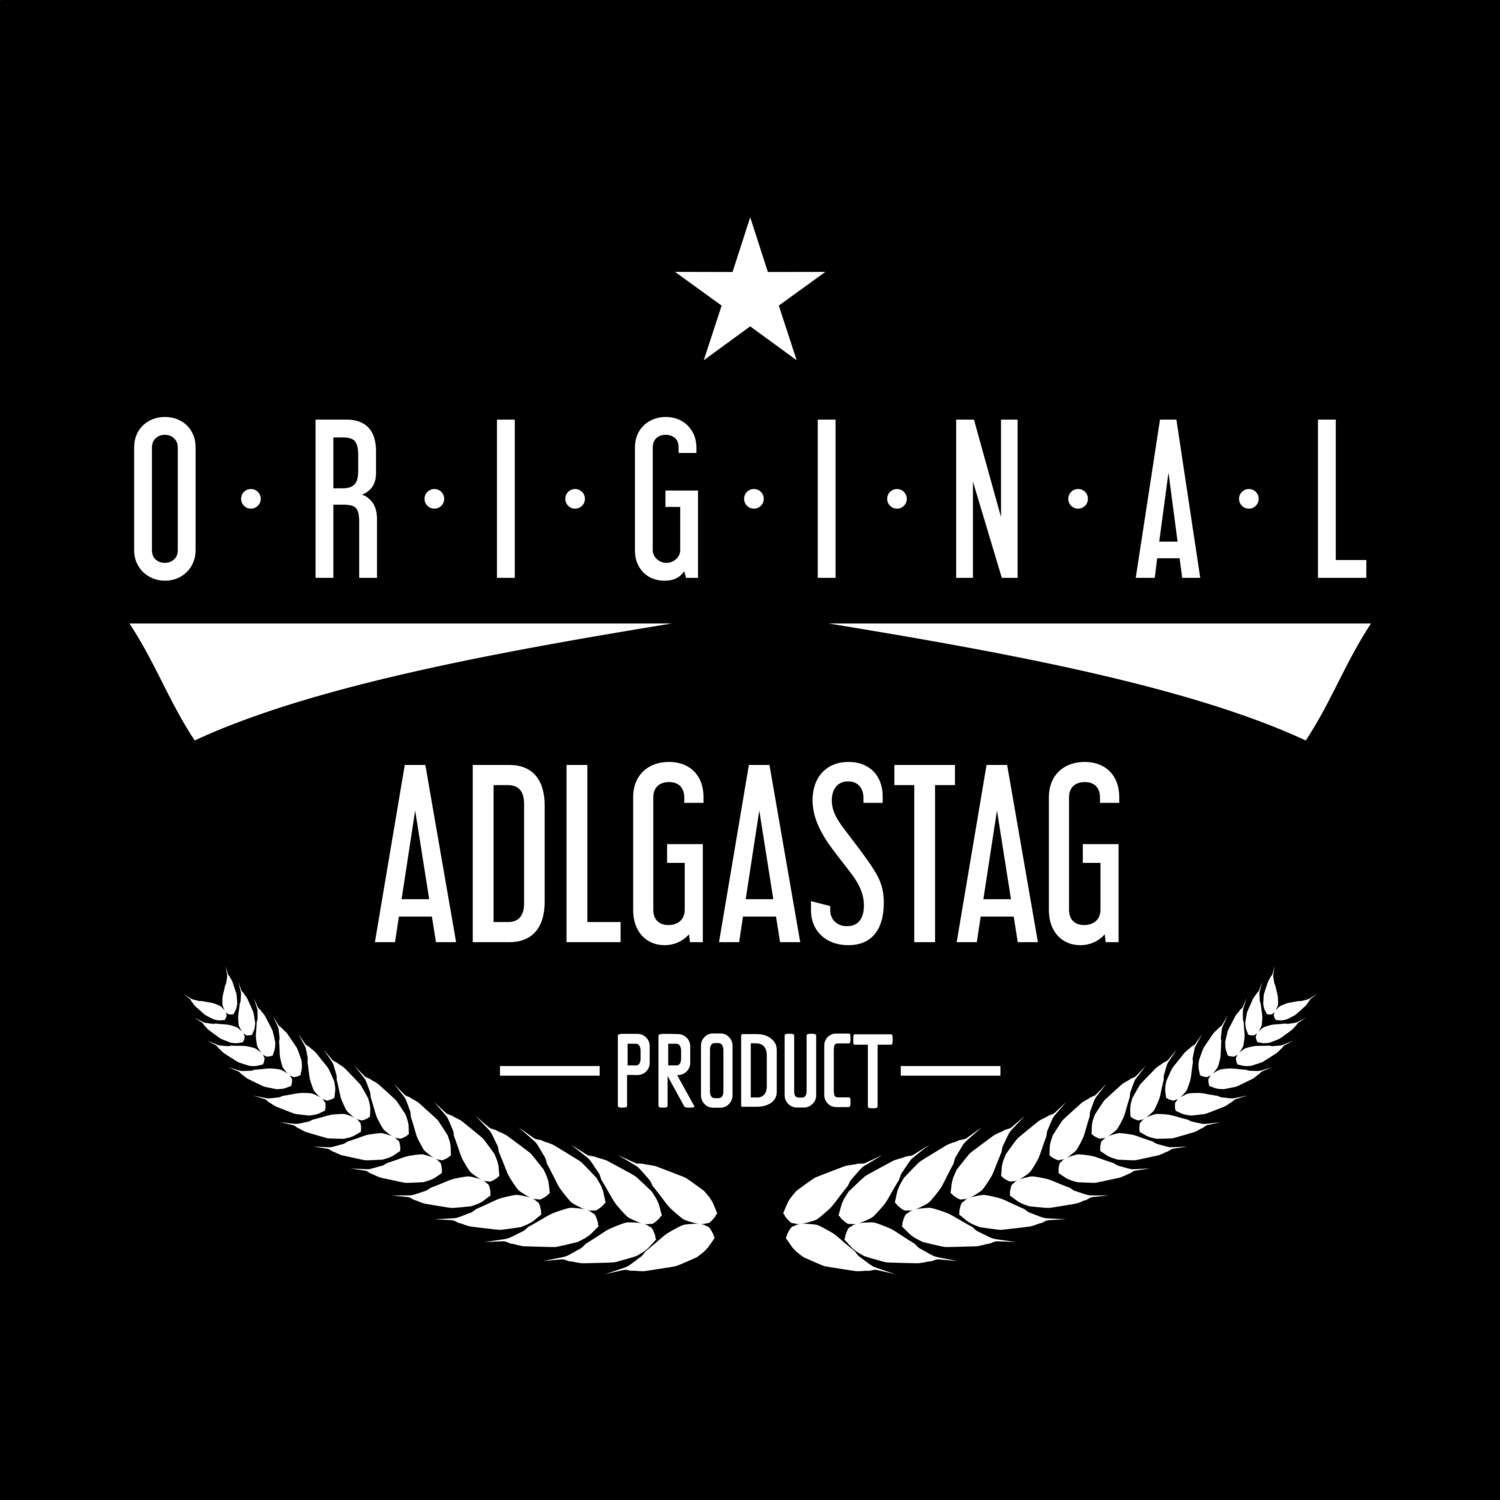 Adlgastag T-Shirt »Original Product«